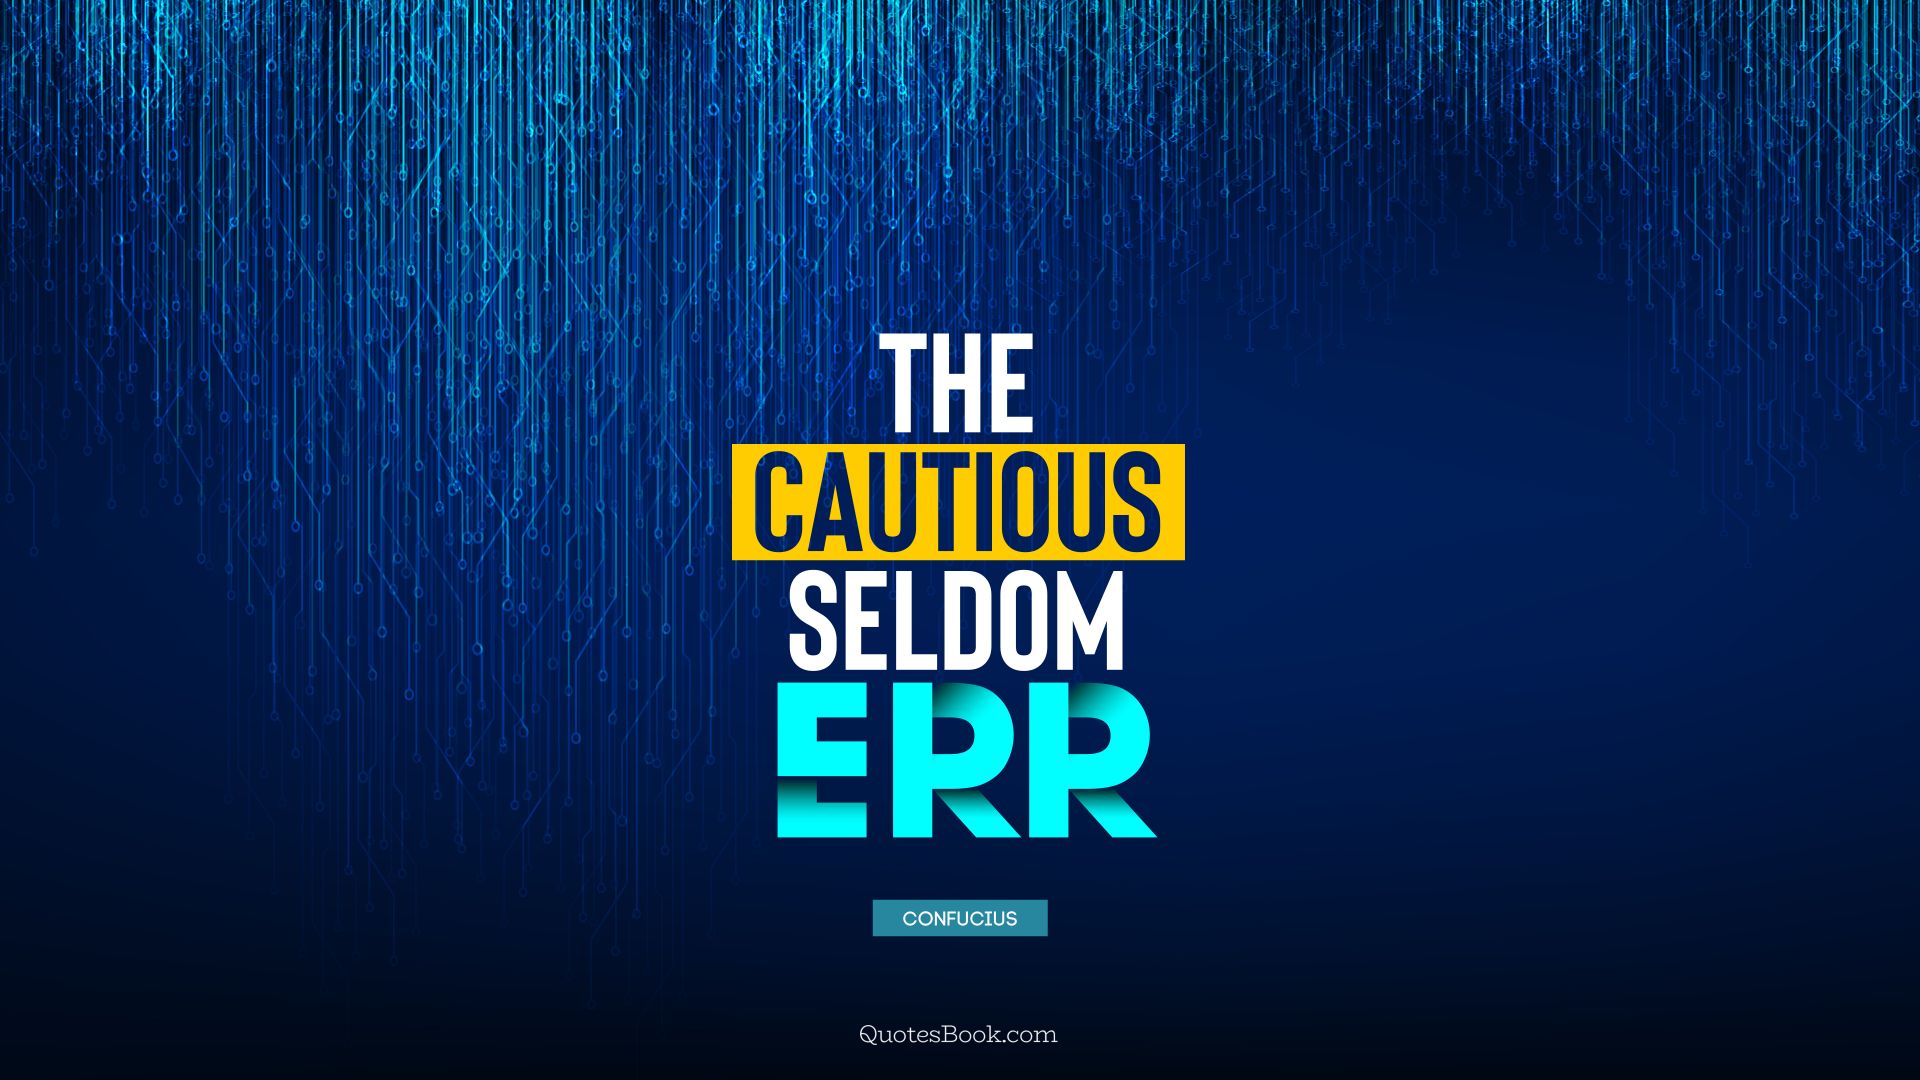 The cautious seldom err. - Quote by Confucius